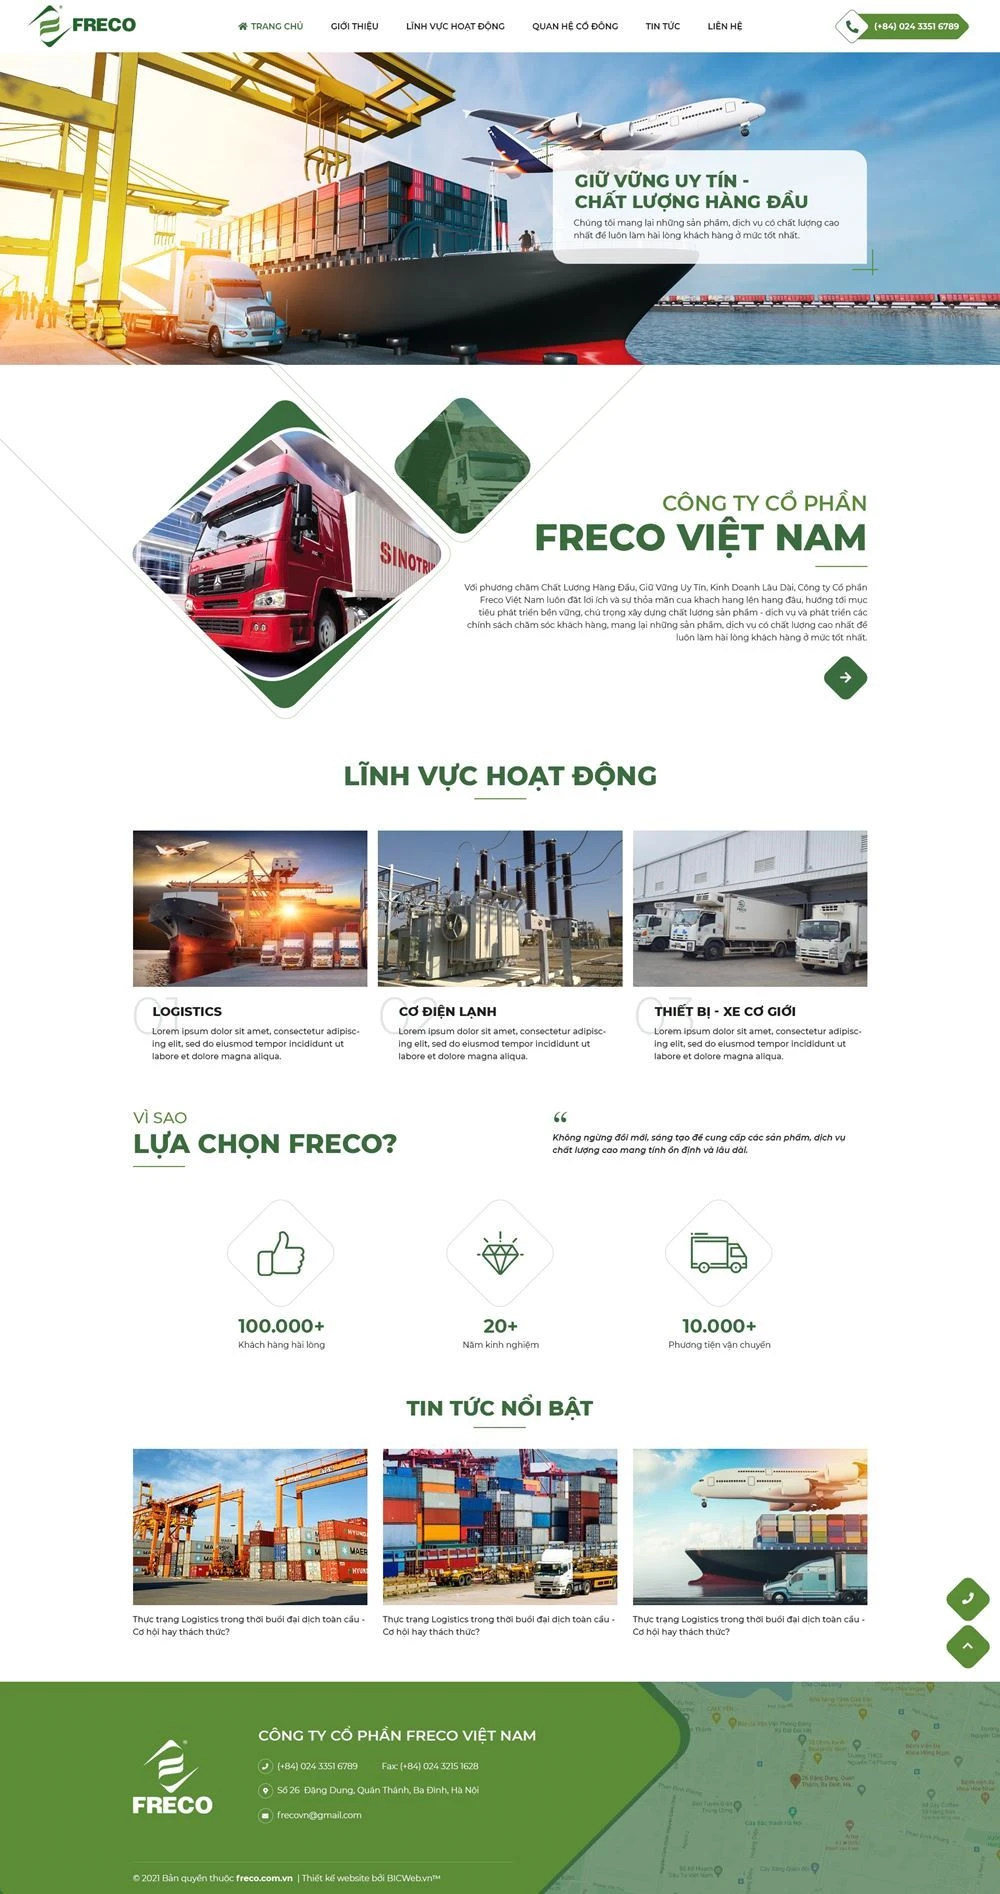 Freco Việt Nam